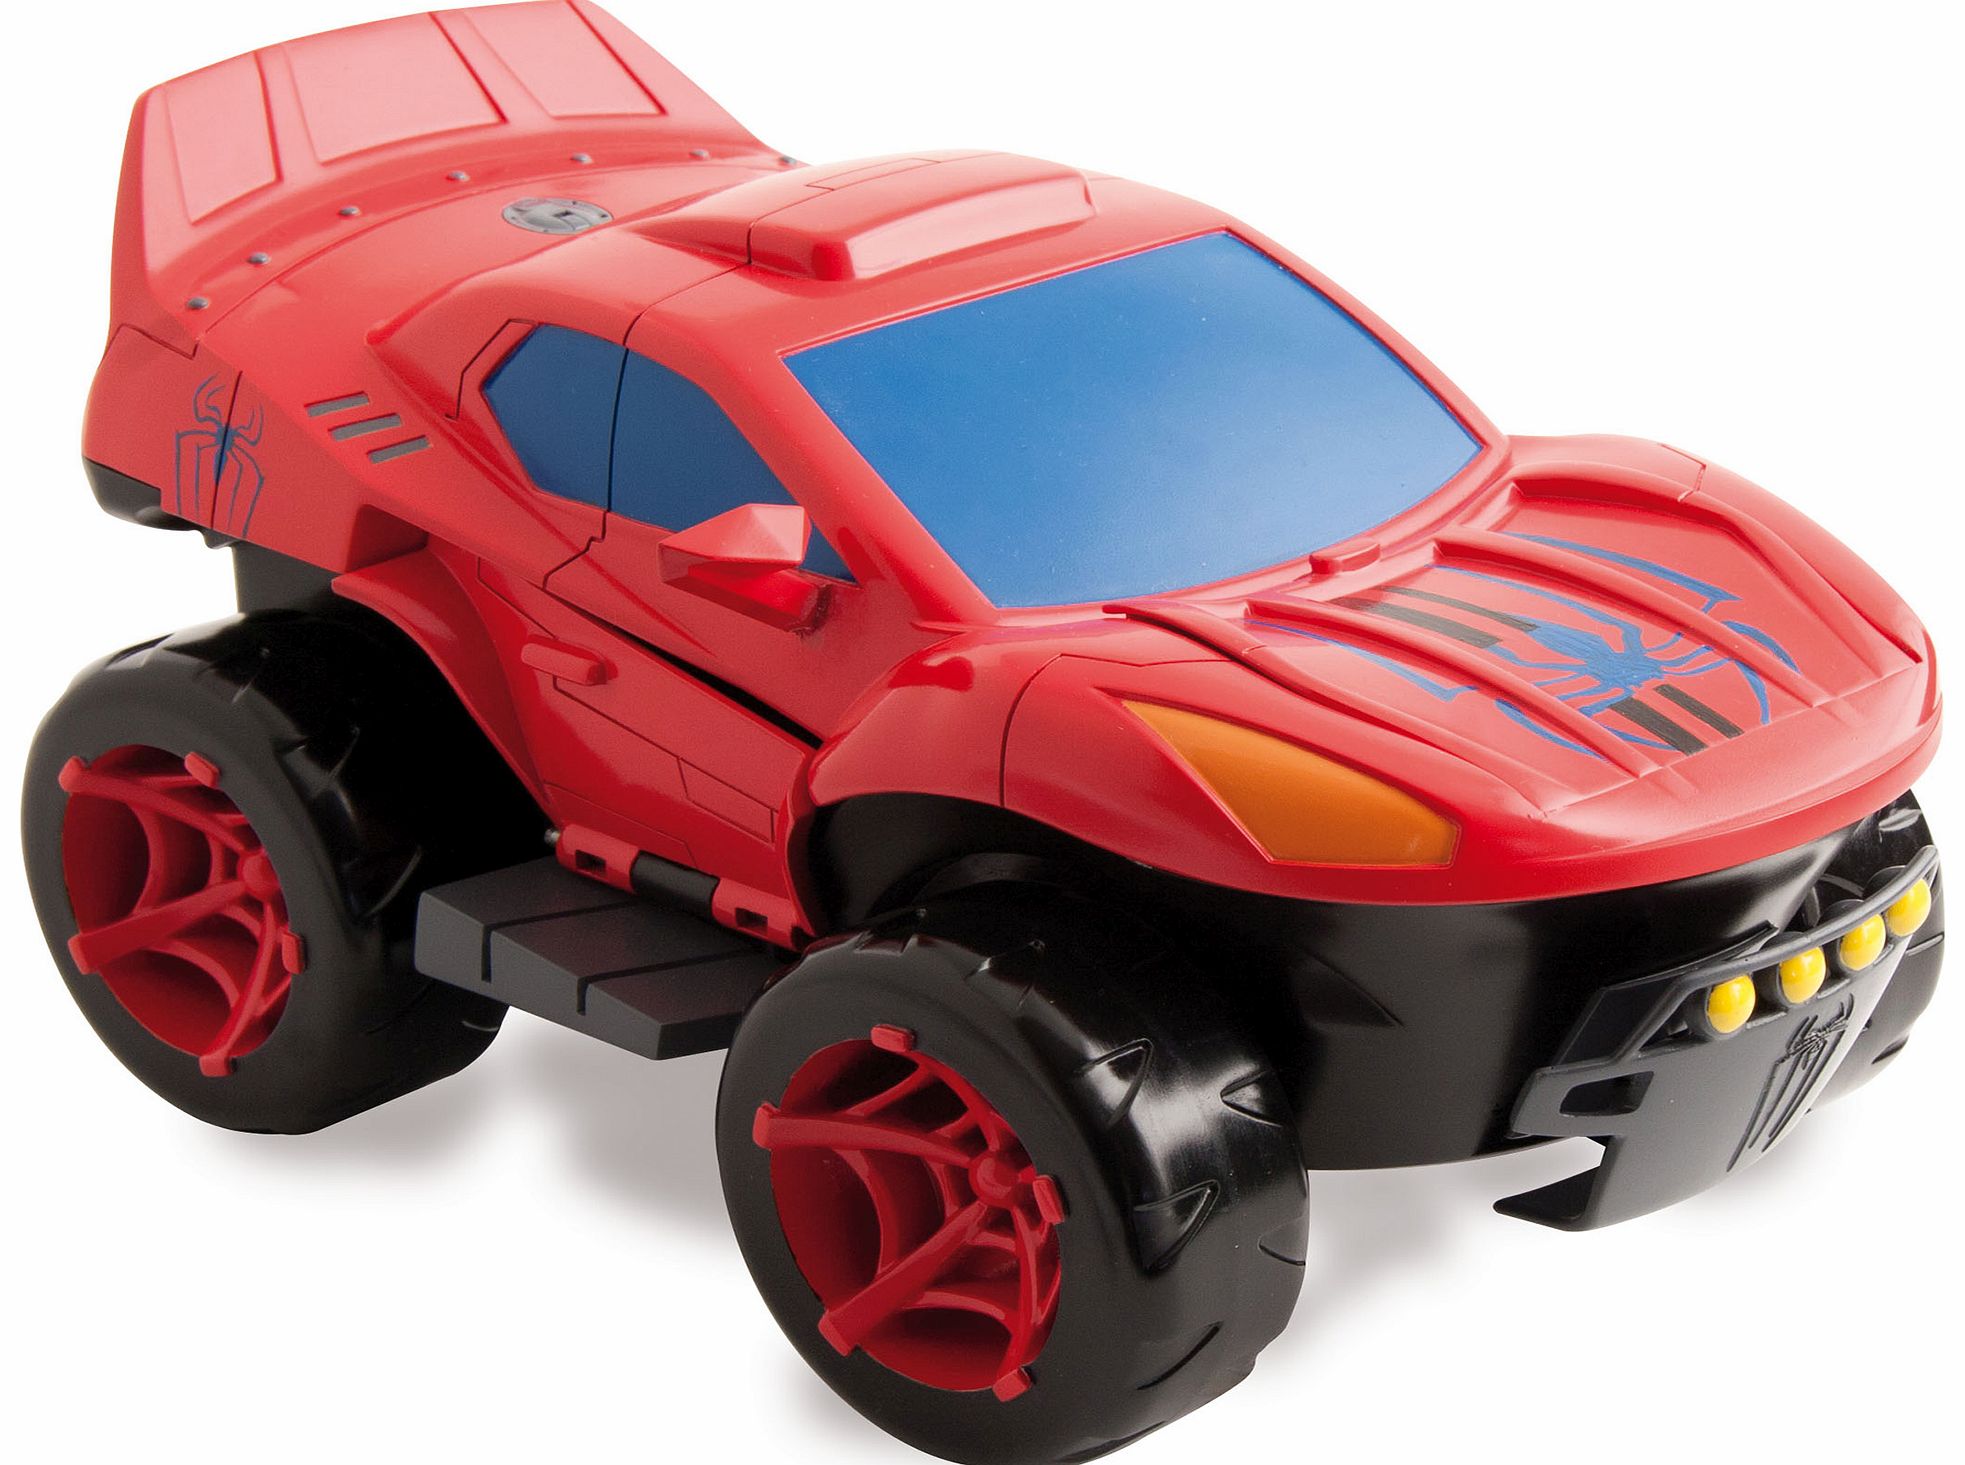 IMC Toys Spider-Man Car Playset